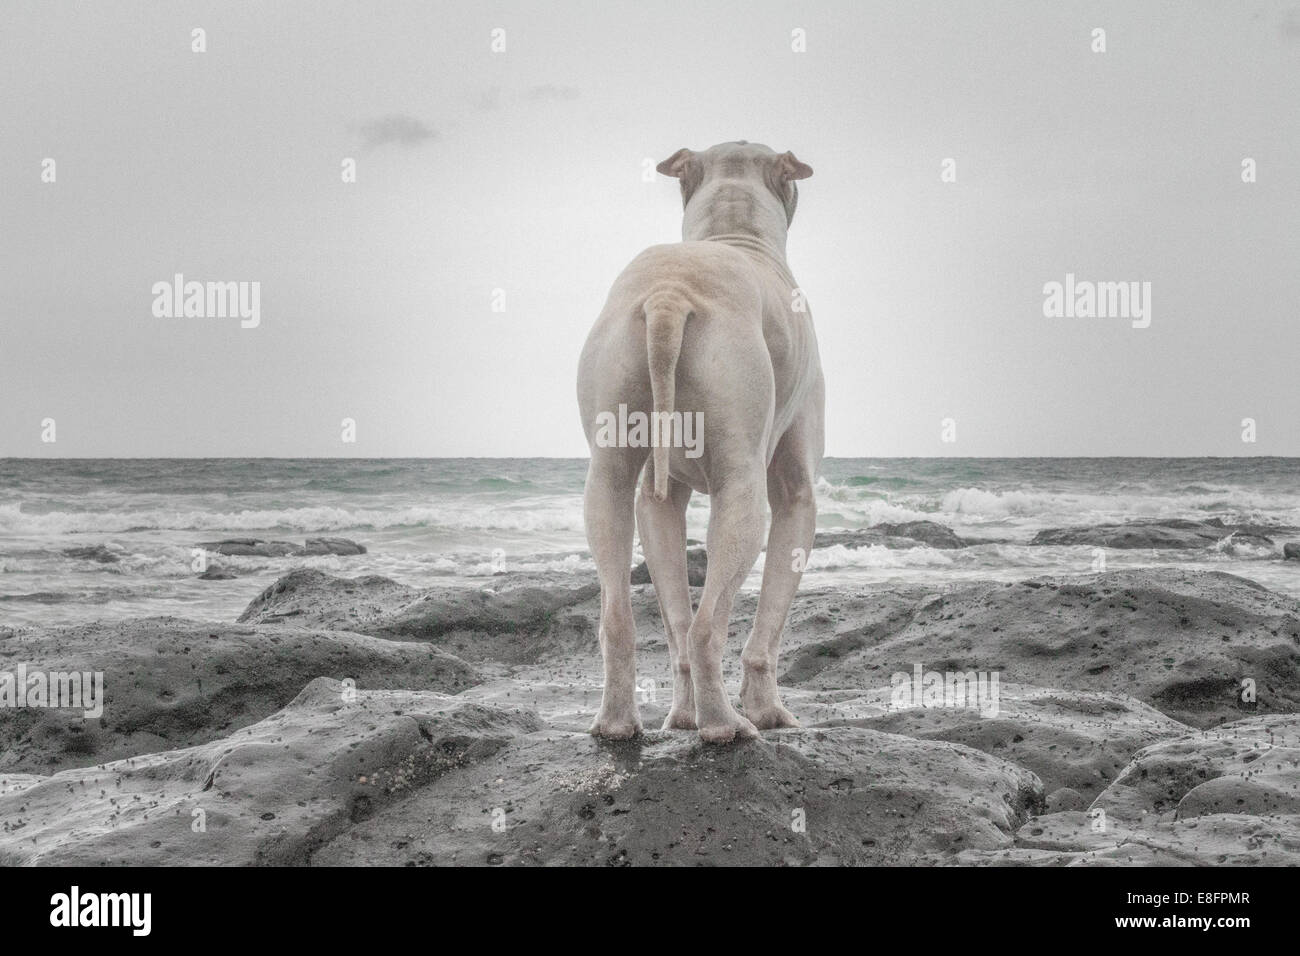 Shair-pei dog standing on rocks on the beach, Australia Stock Photo